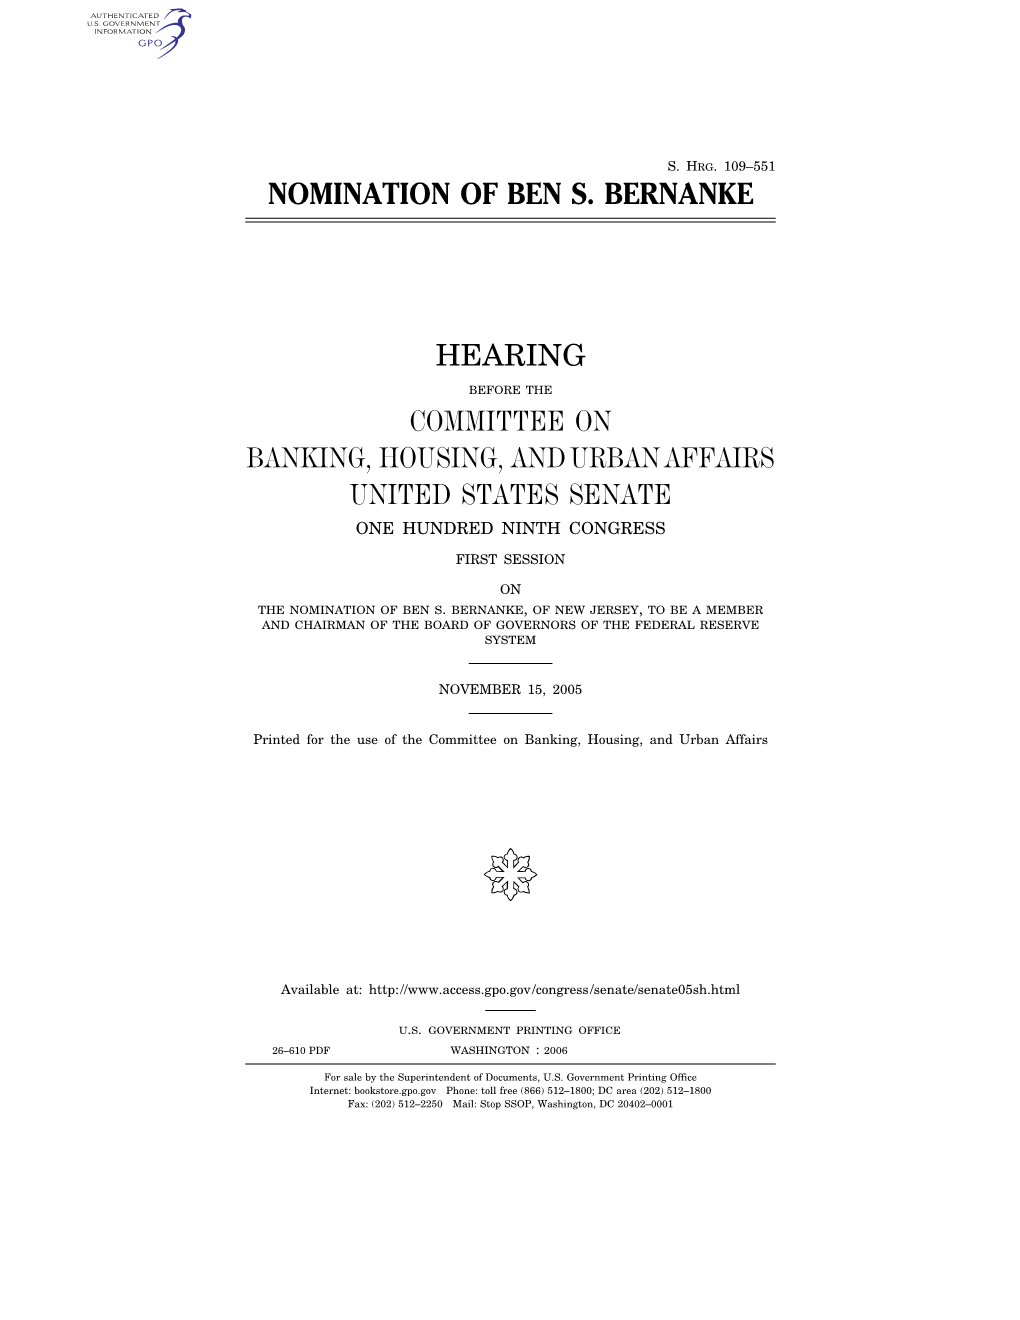 Nomination of Ben S. Bernanke